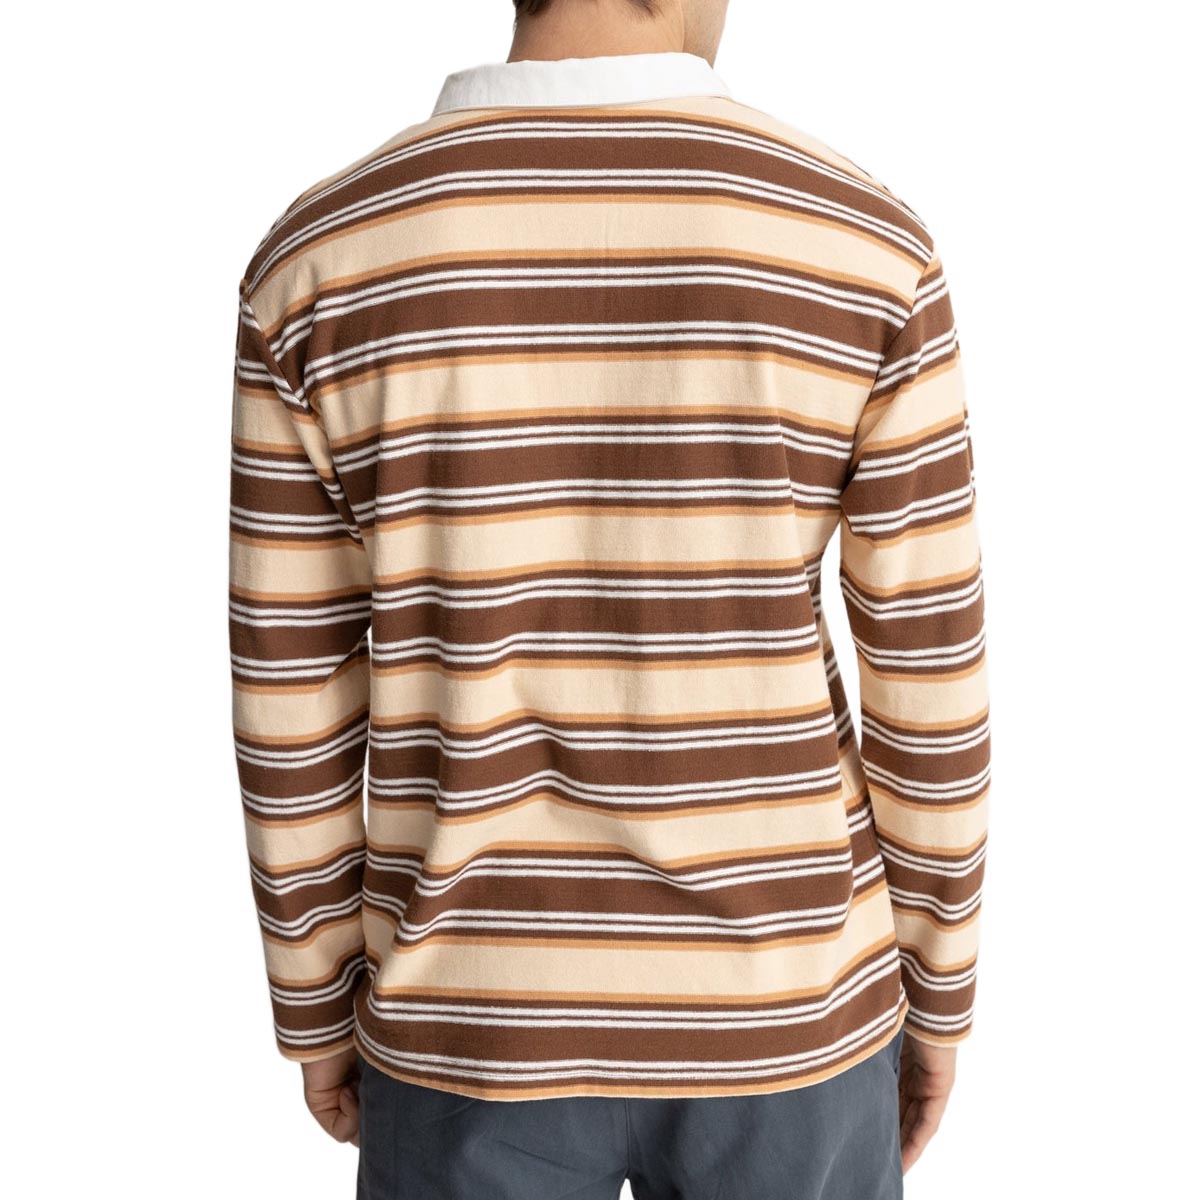 Rhythm Vintage Stripe Polo Long Sleeve Shirt - Coffee image 2